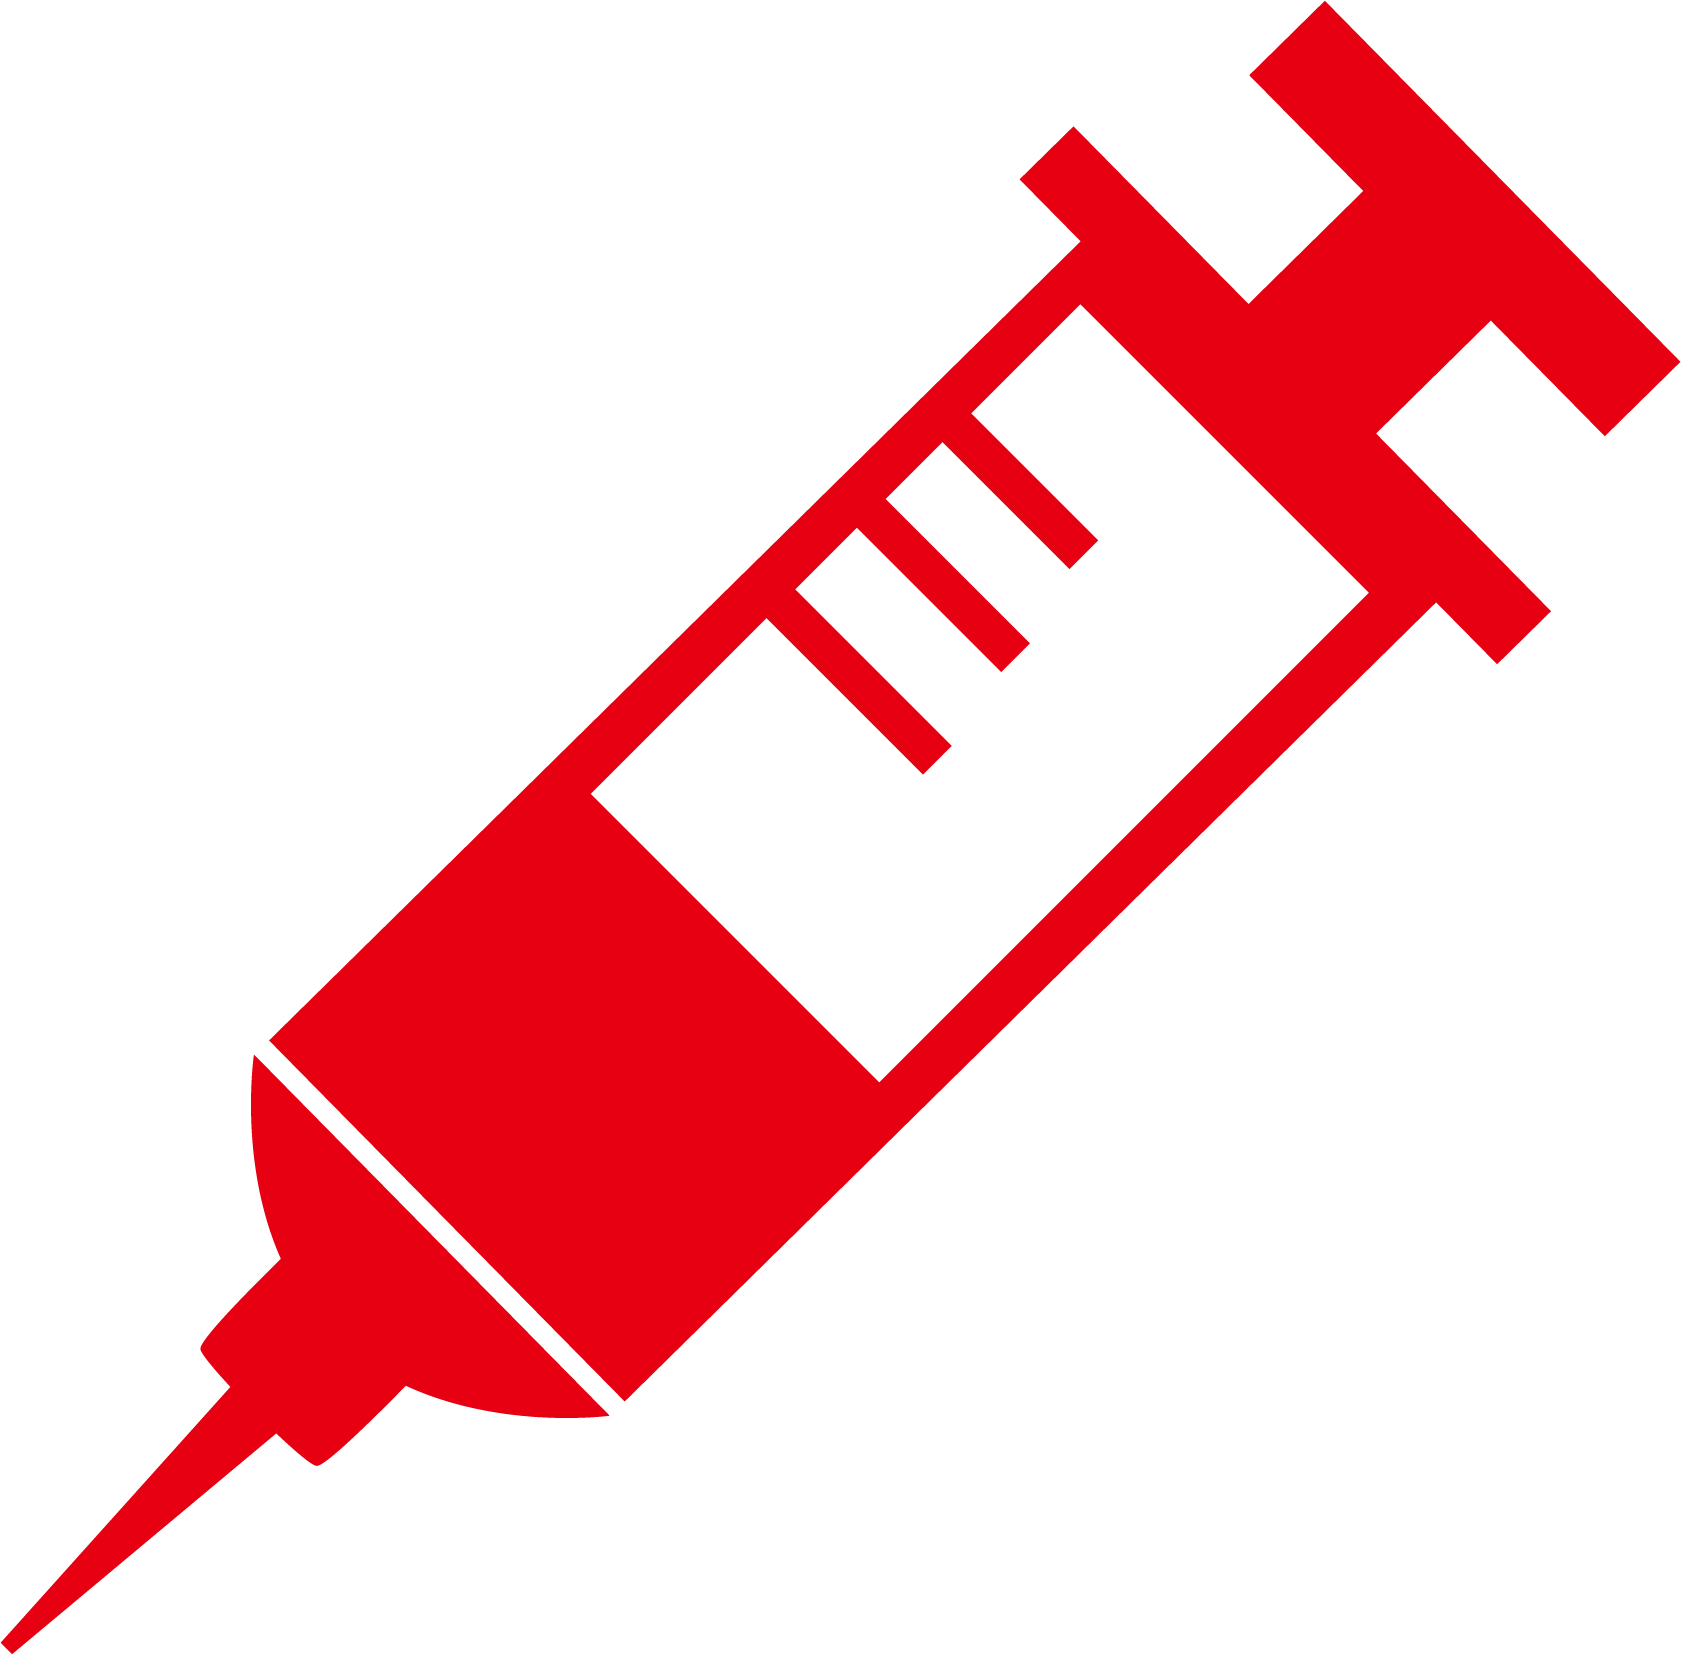 Syringe clipart parallel. Physician medicine symbol icon